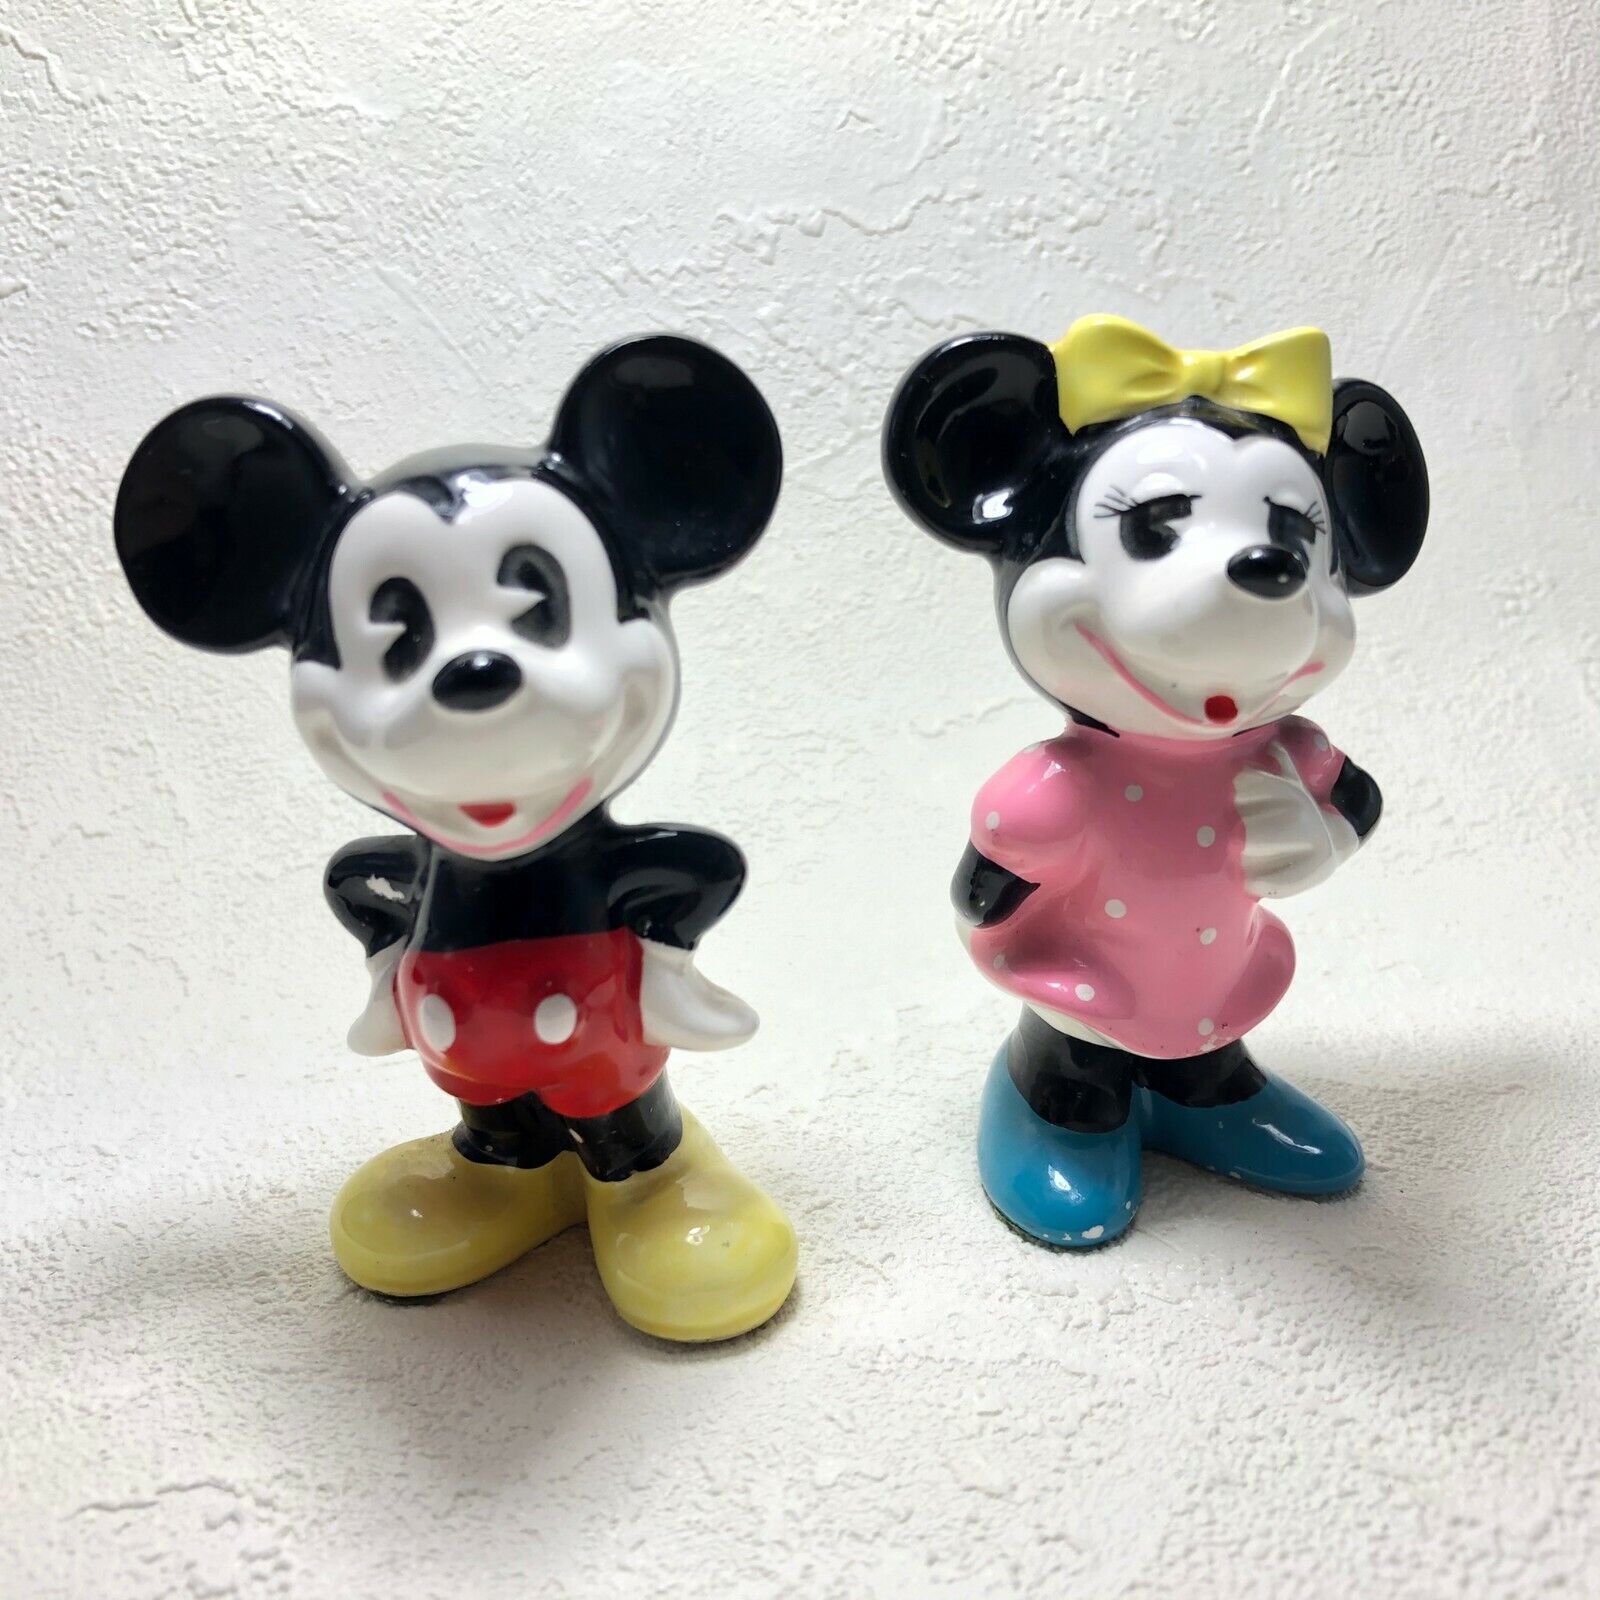 Mickey Minnie ceramic figurines 1983 Tokyo Disneyland Grand opening Vintage us17